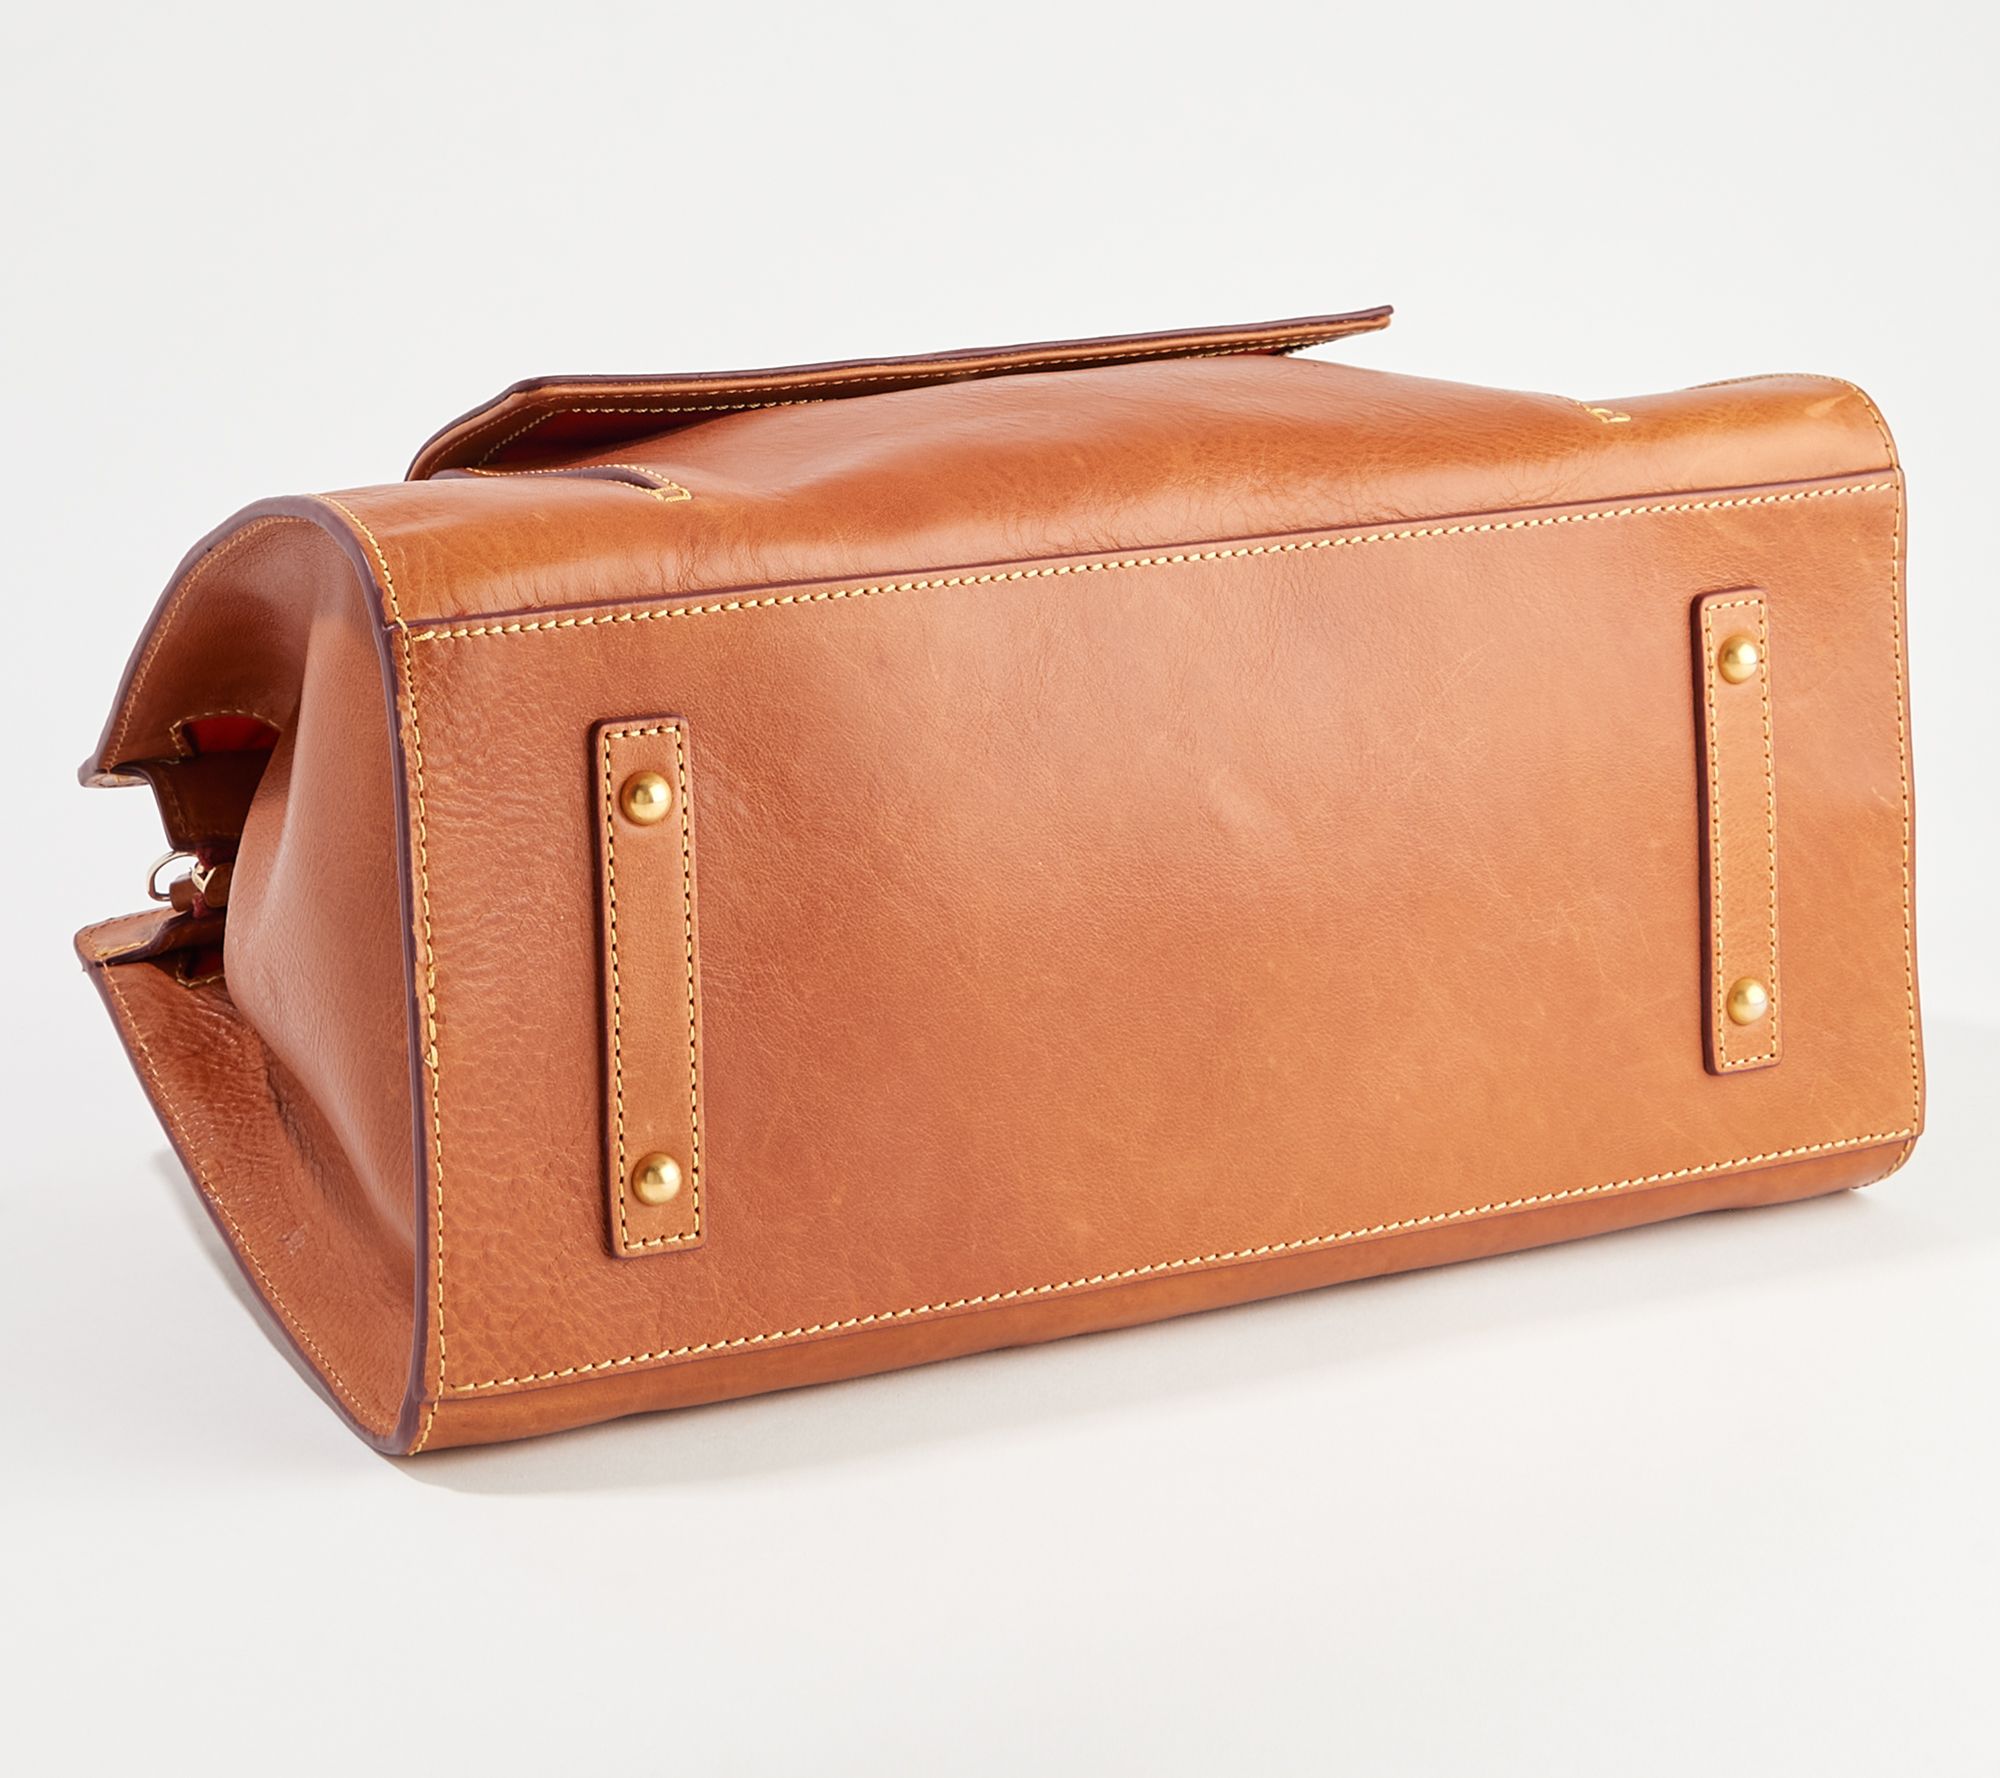 Dooney & Bourke Florentine Leather Twist Sac Shoulder Bag on QVC 